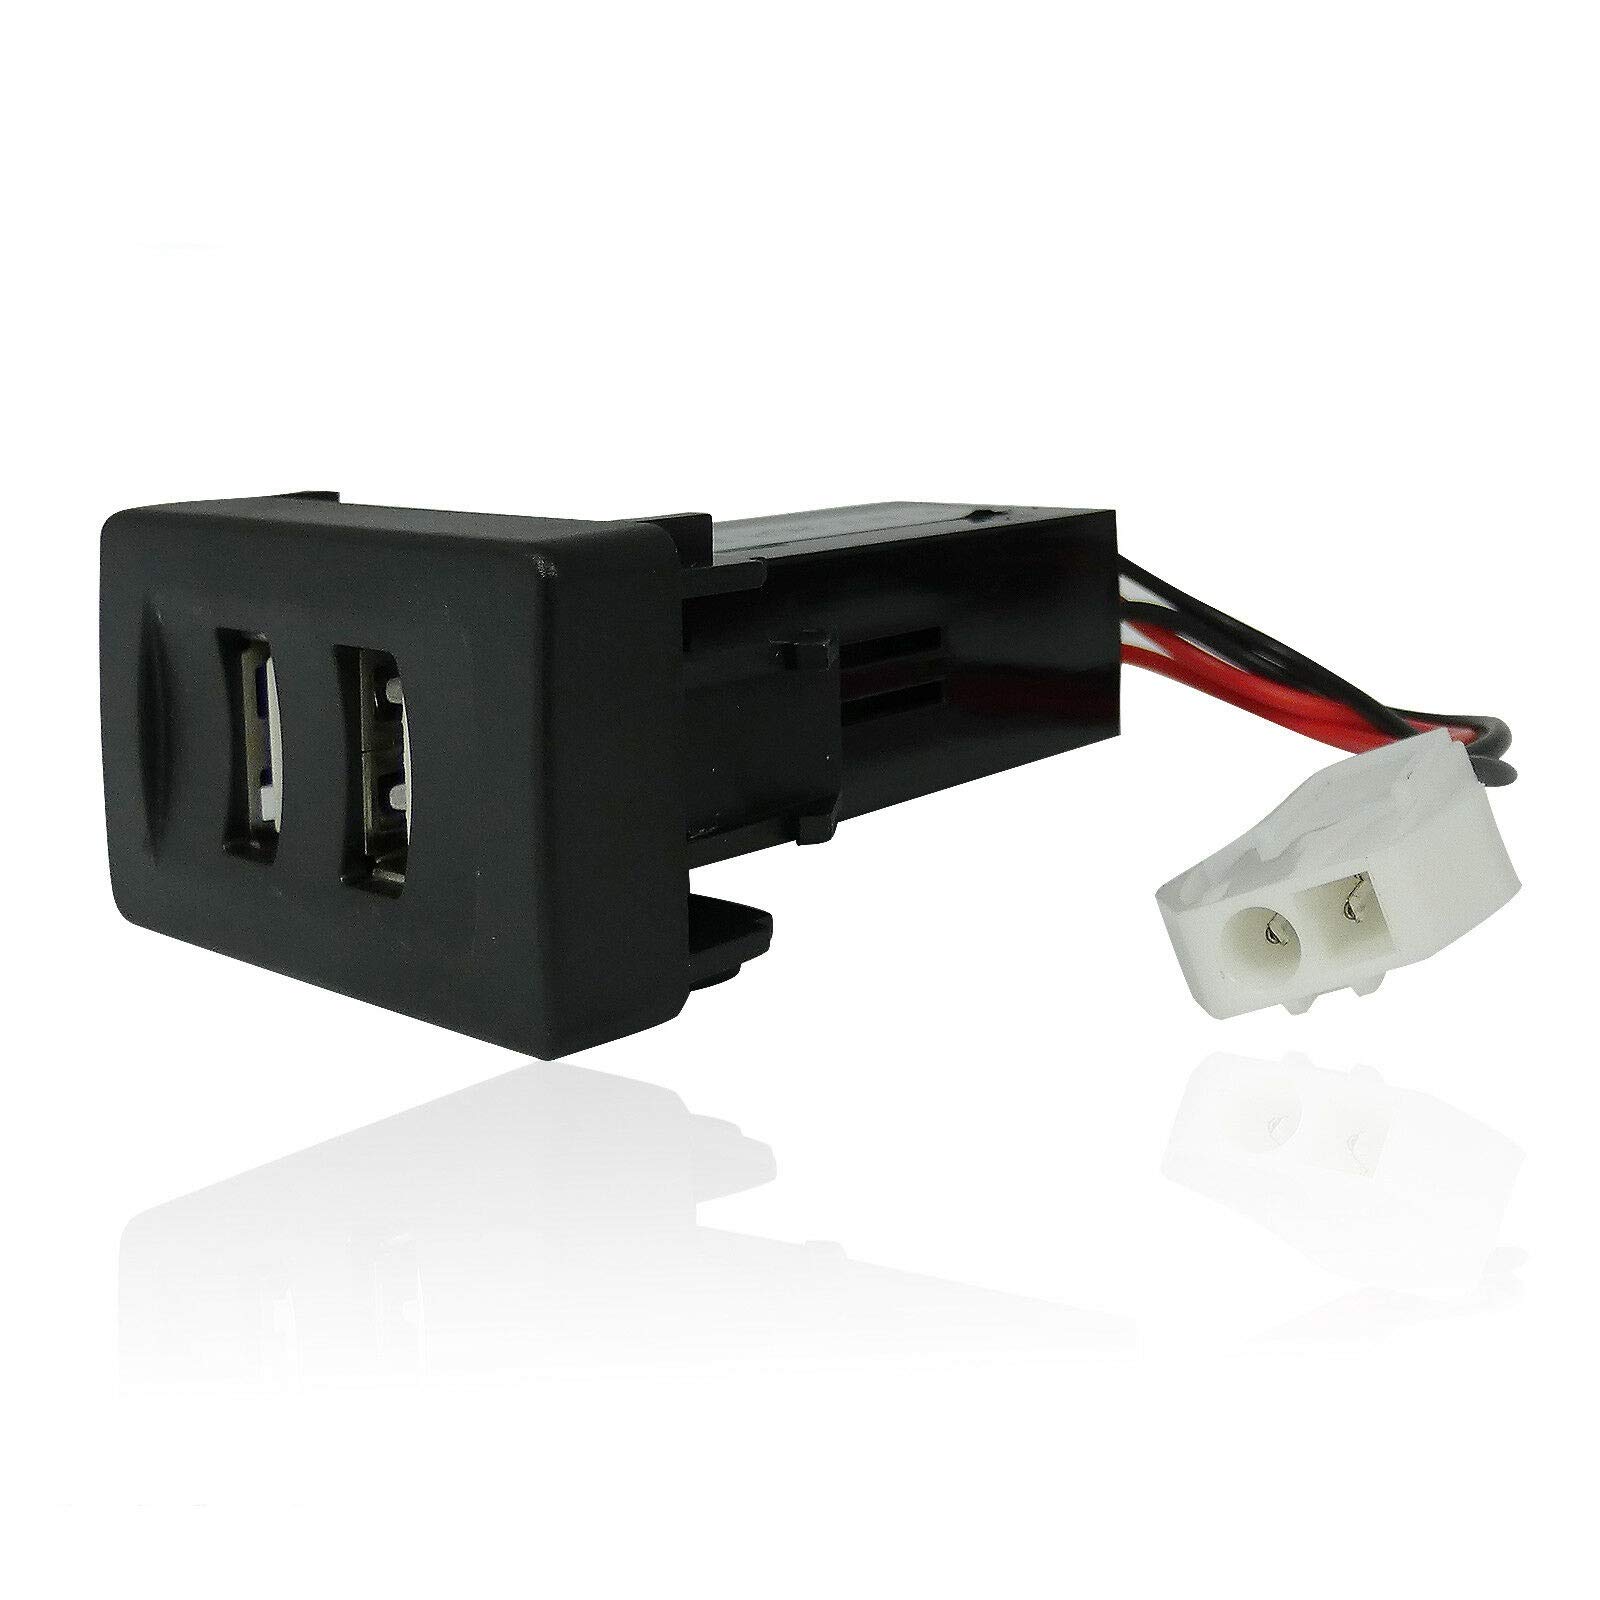 AB1 Flexzon Armaturenbrett-Panel Dual USB-Port Ladegerät Steckdose 12 V für Armaturenbrett von AB1